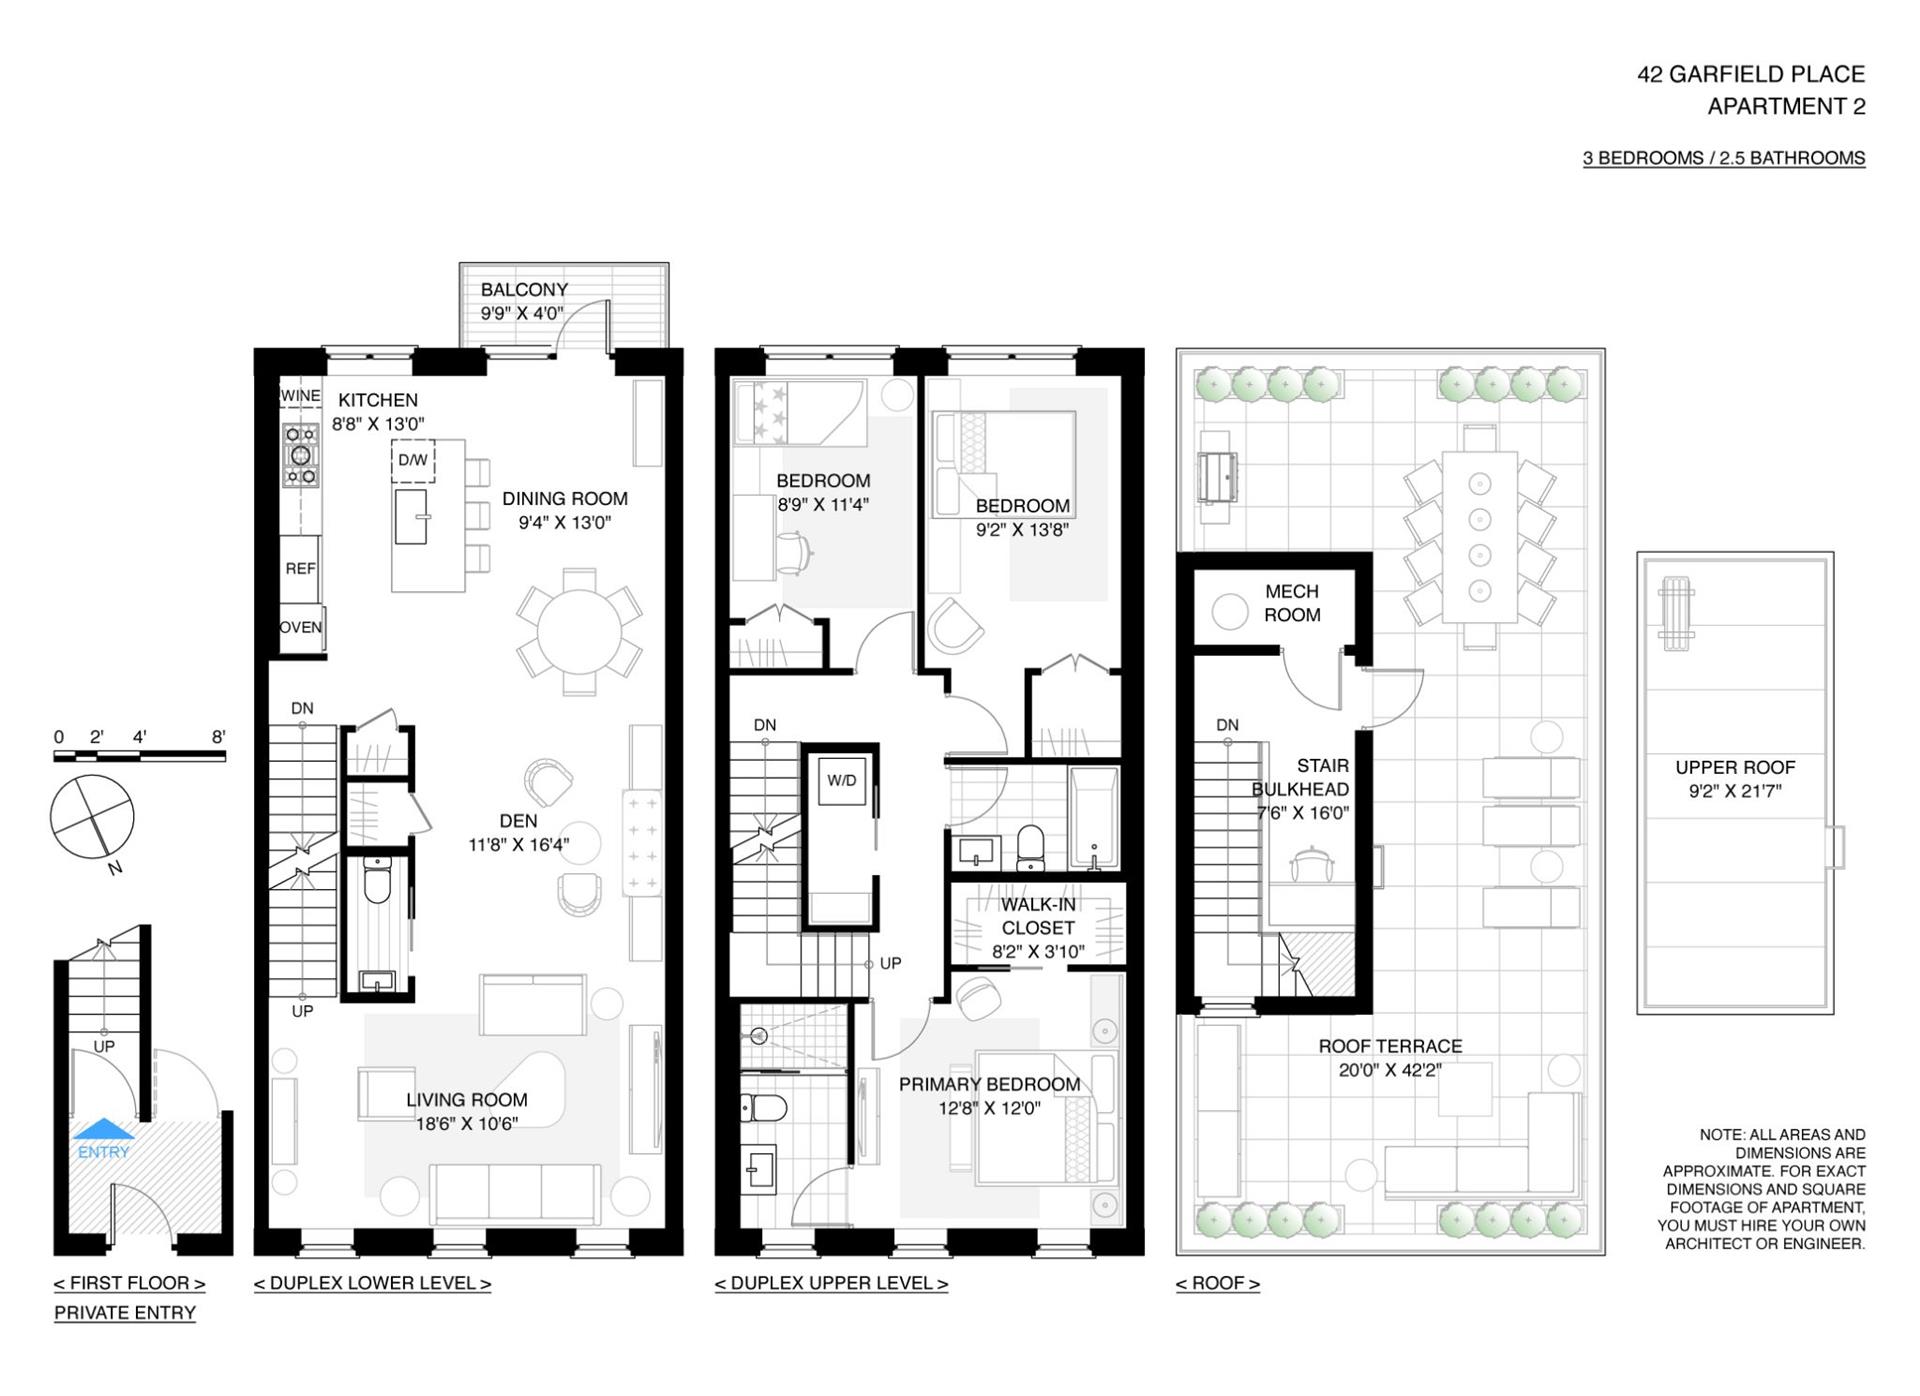 Floorplan for 42 Garfield Place, 2